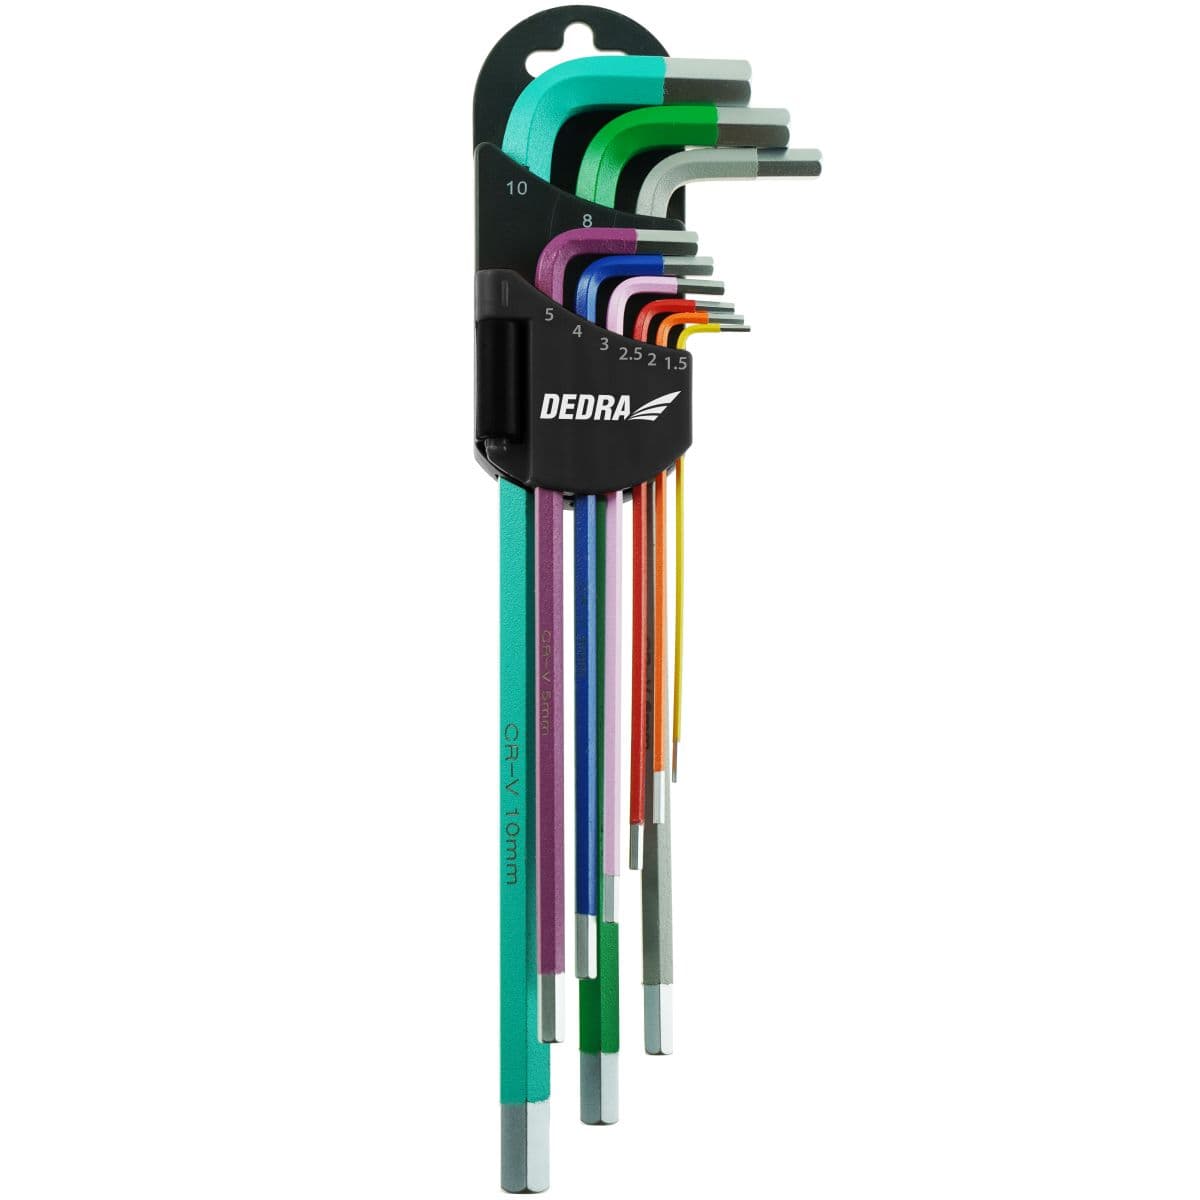 Imbusové klíče extra dlouhé barevné, 1,5–10 mm, sada 9 ks,S2 DEDRA 06F205